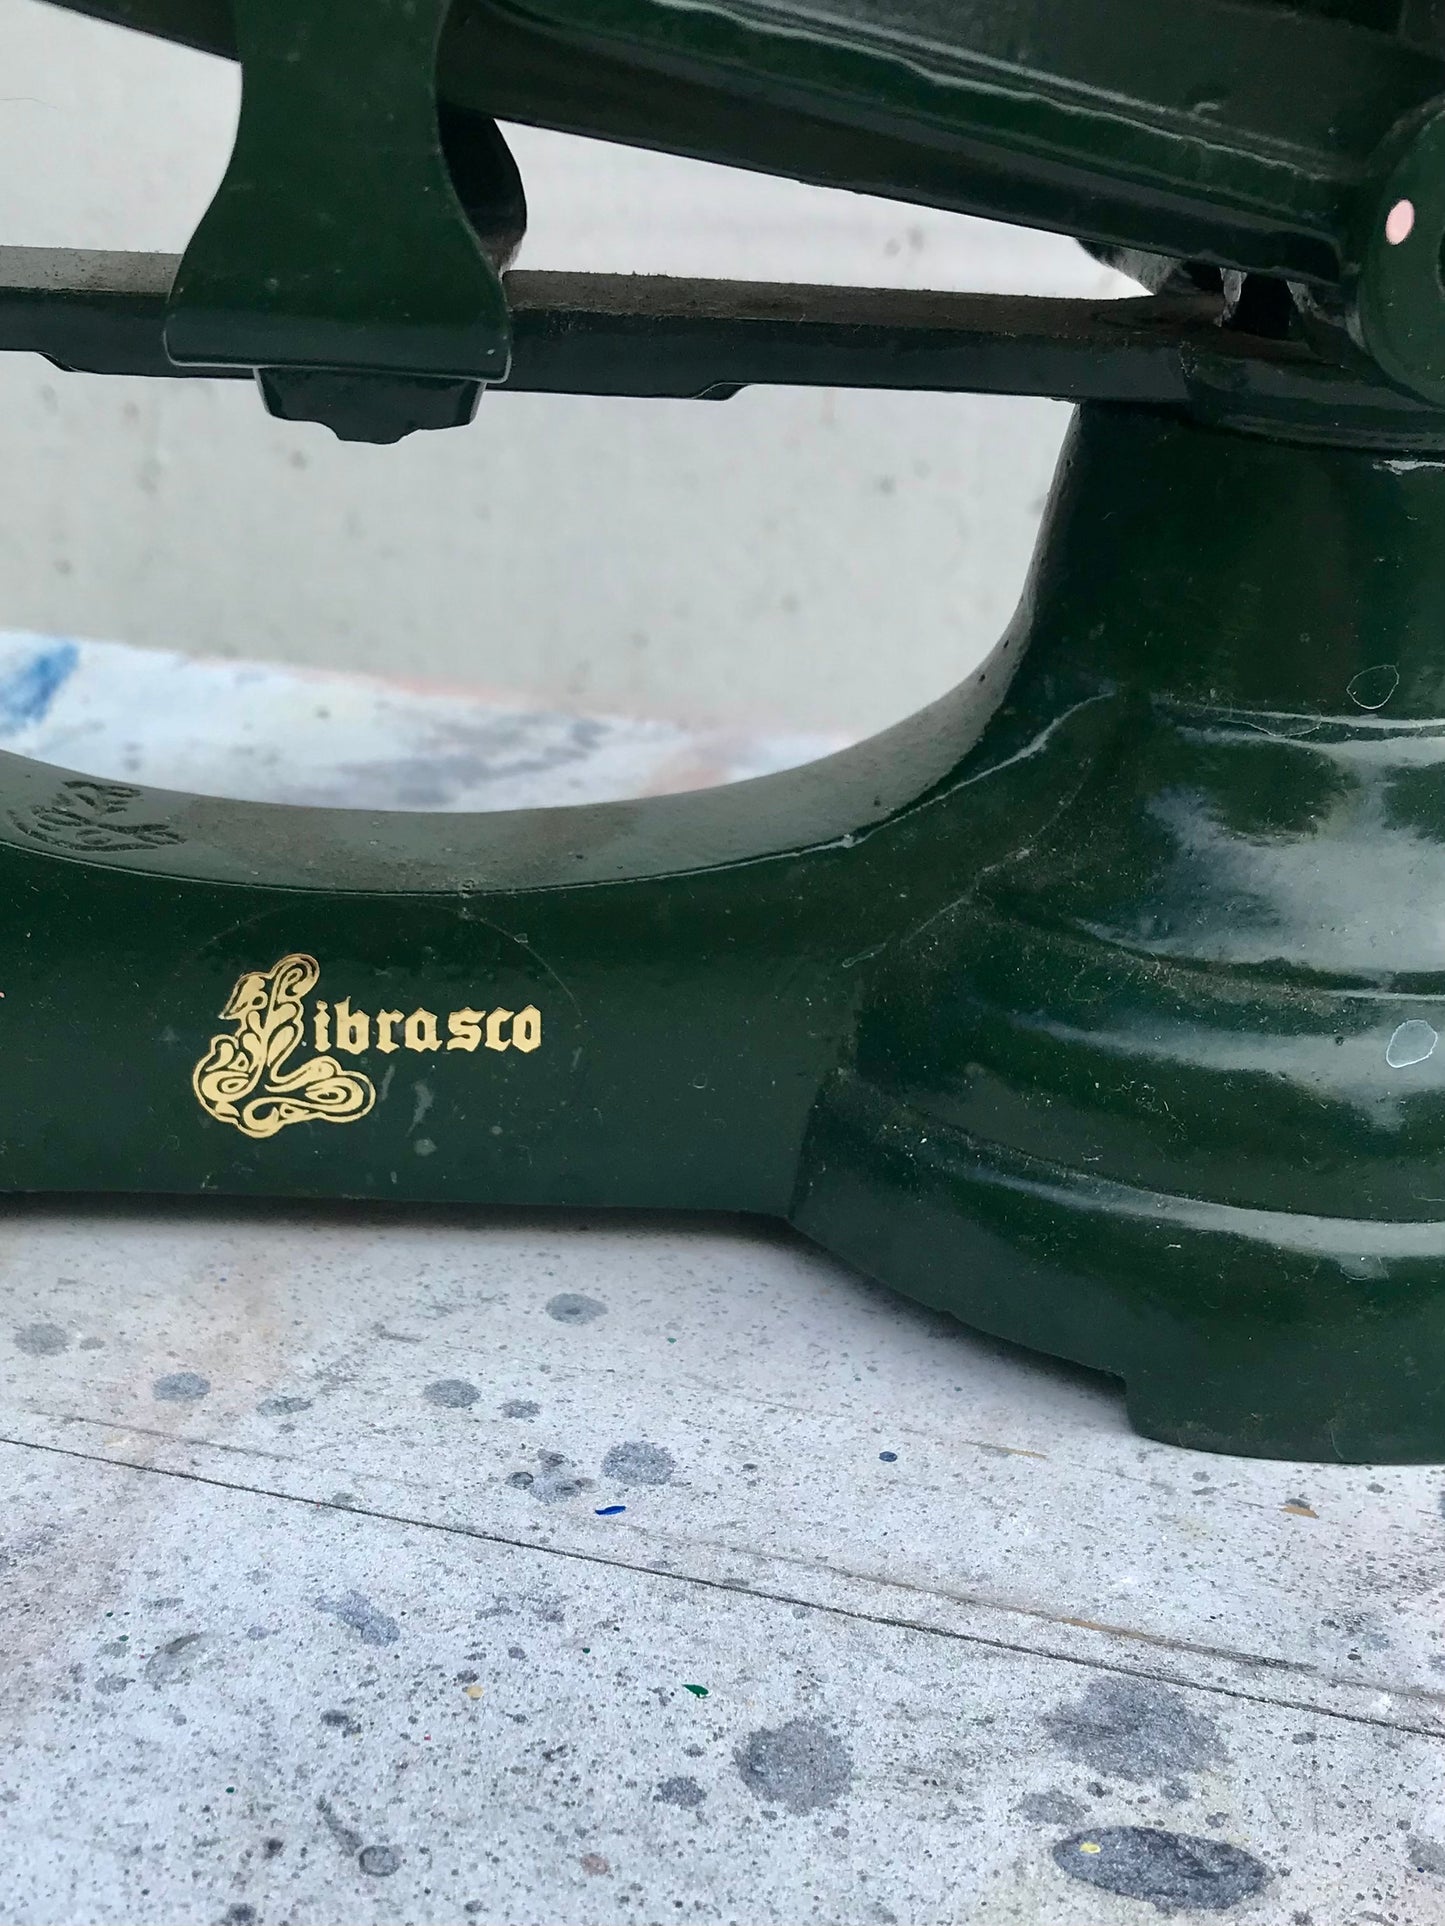 Vintage brass tone green kitchen weighing scales